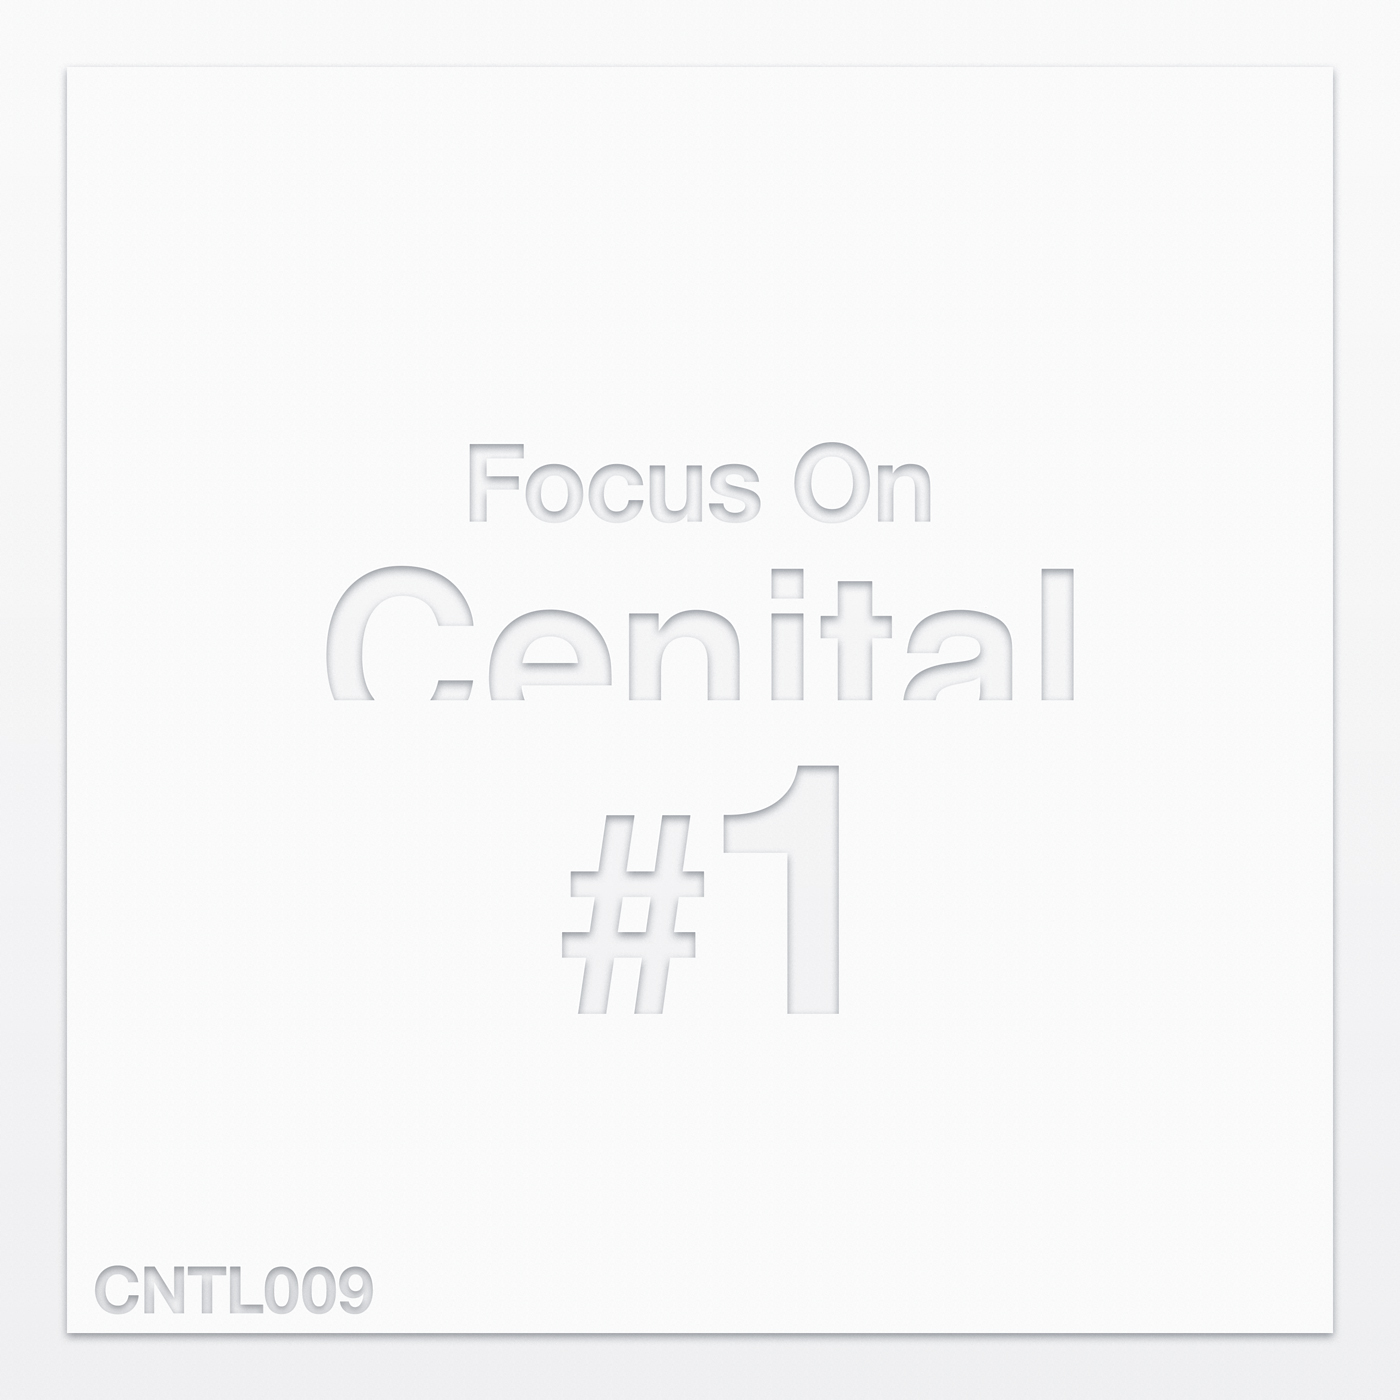 Focus On Cenital #1 [CNTL009]